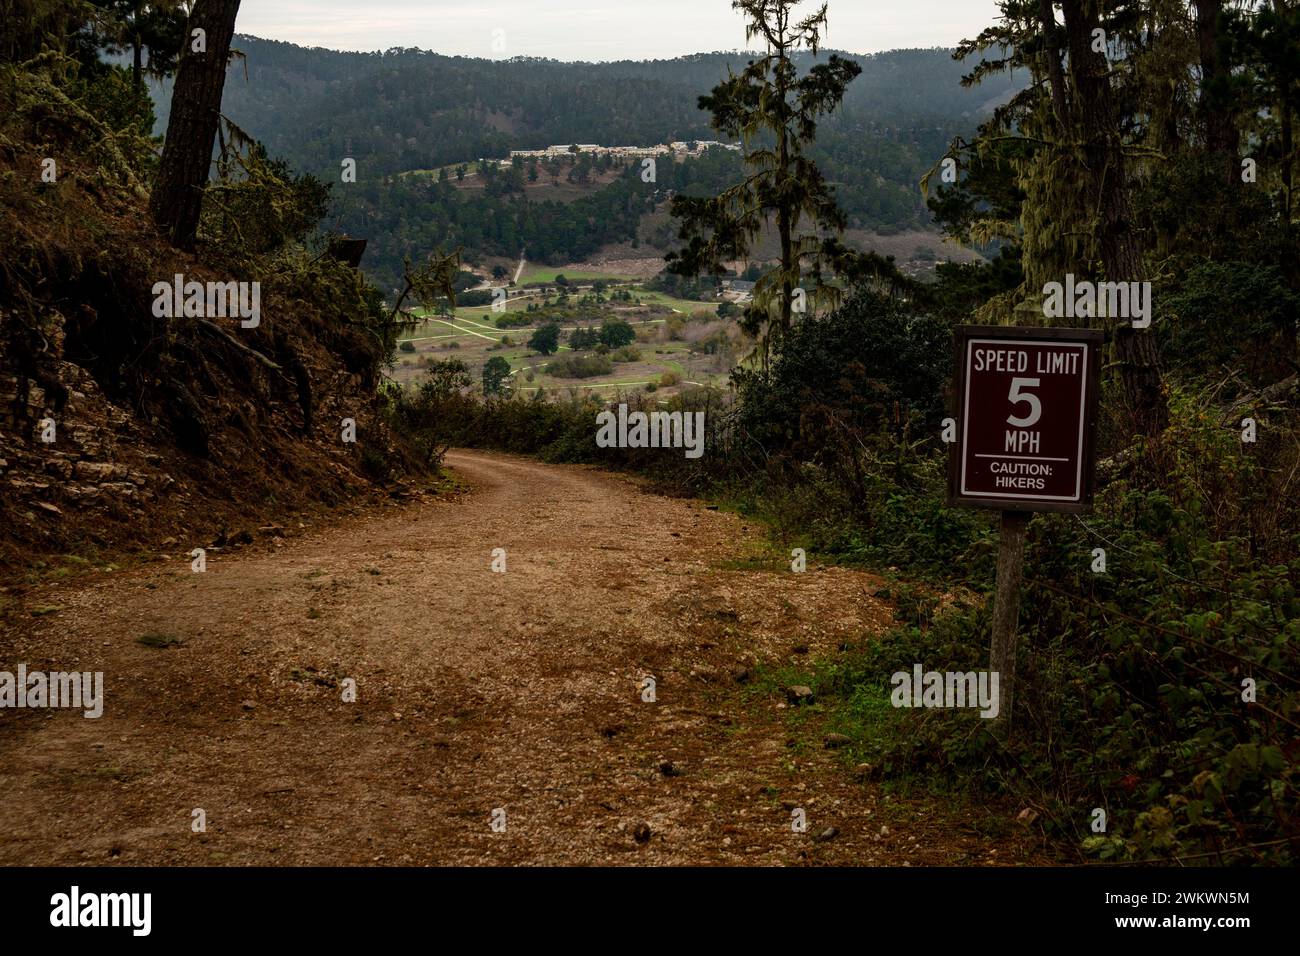 Downhill speedlimit on trail to Inspiration Point in Palo Corona Regional Park, Carmel Valley, California. Stock Photo